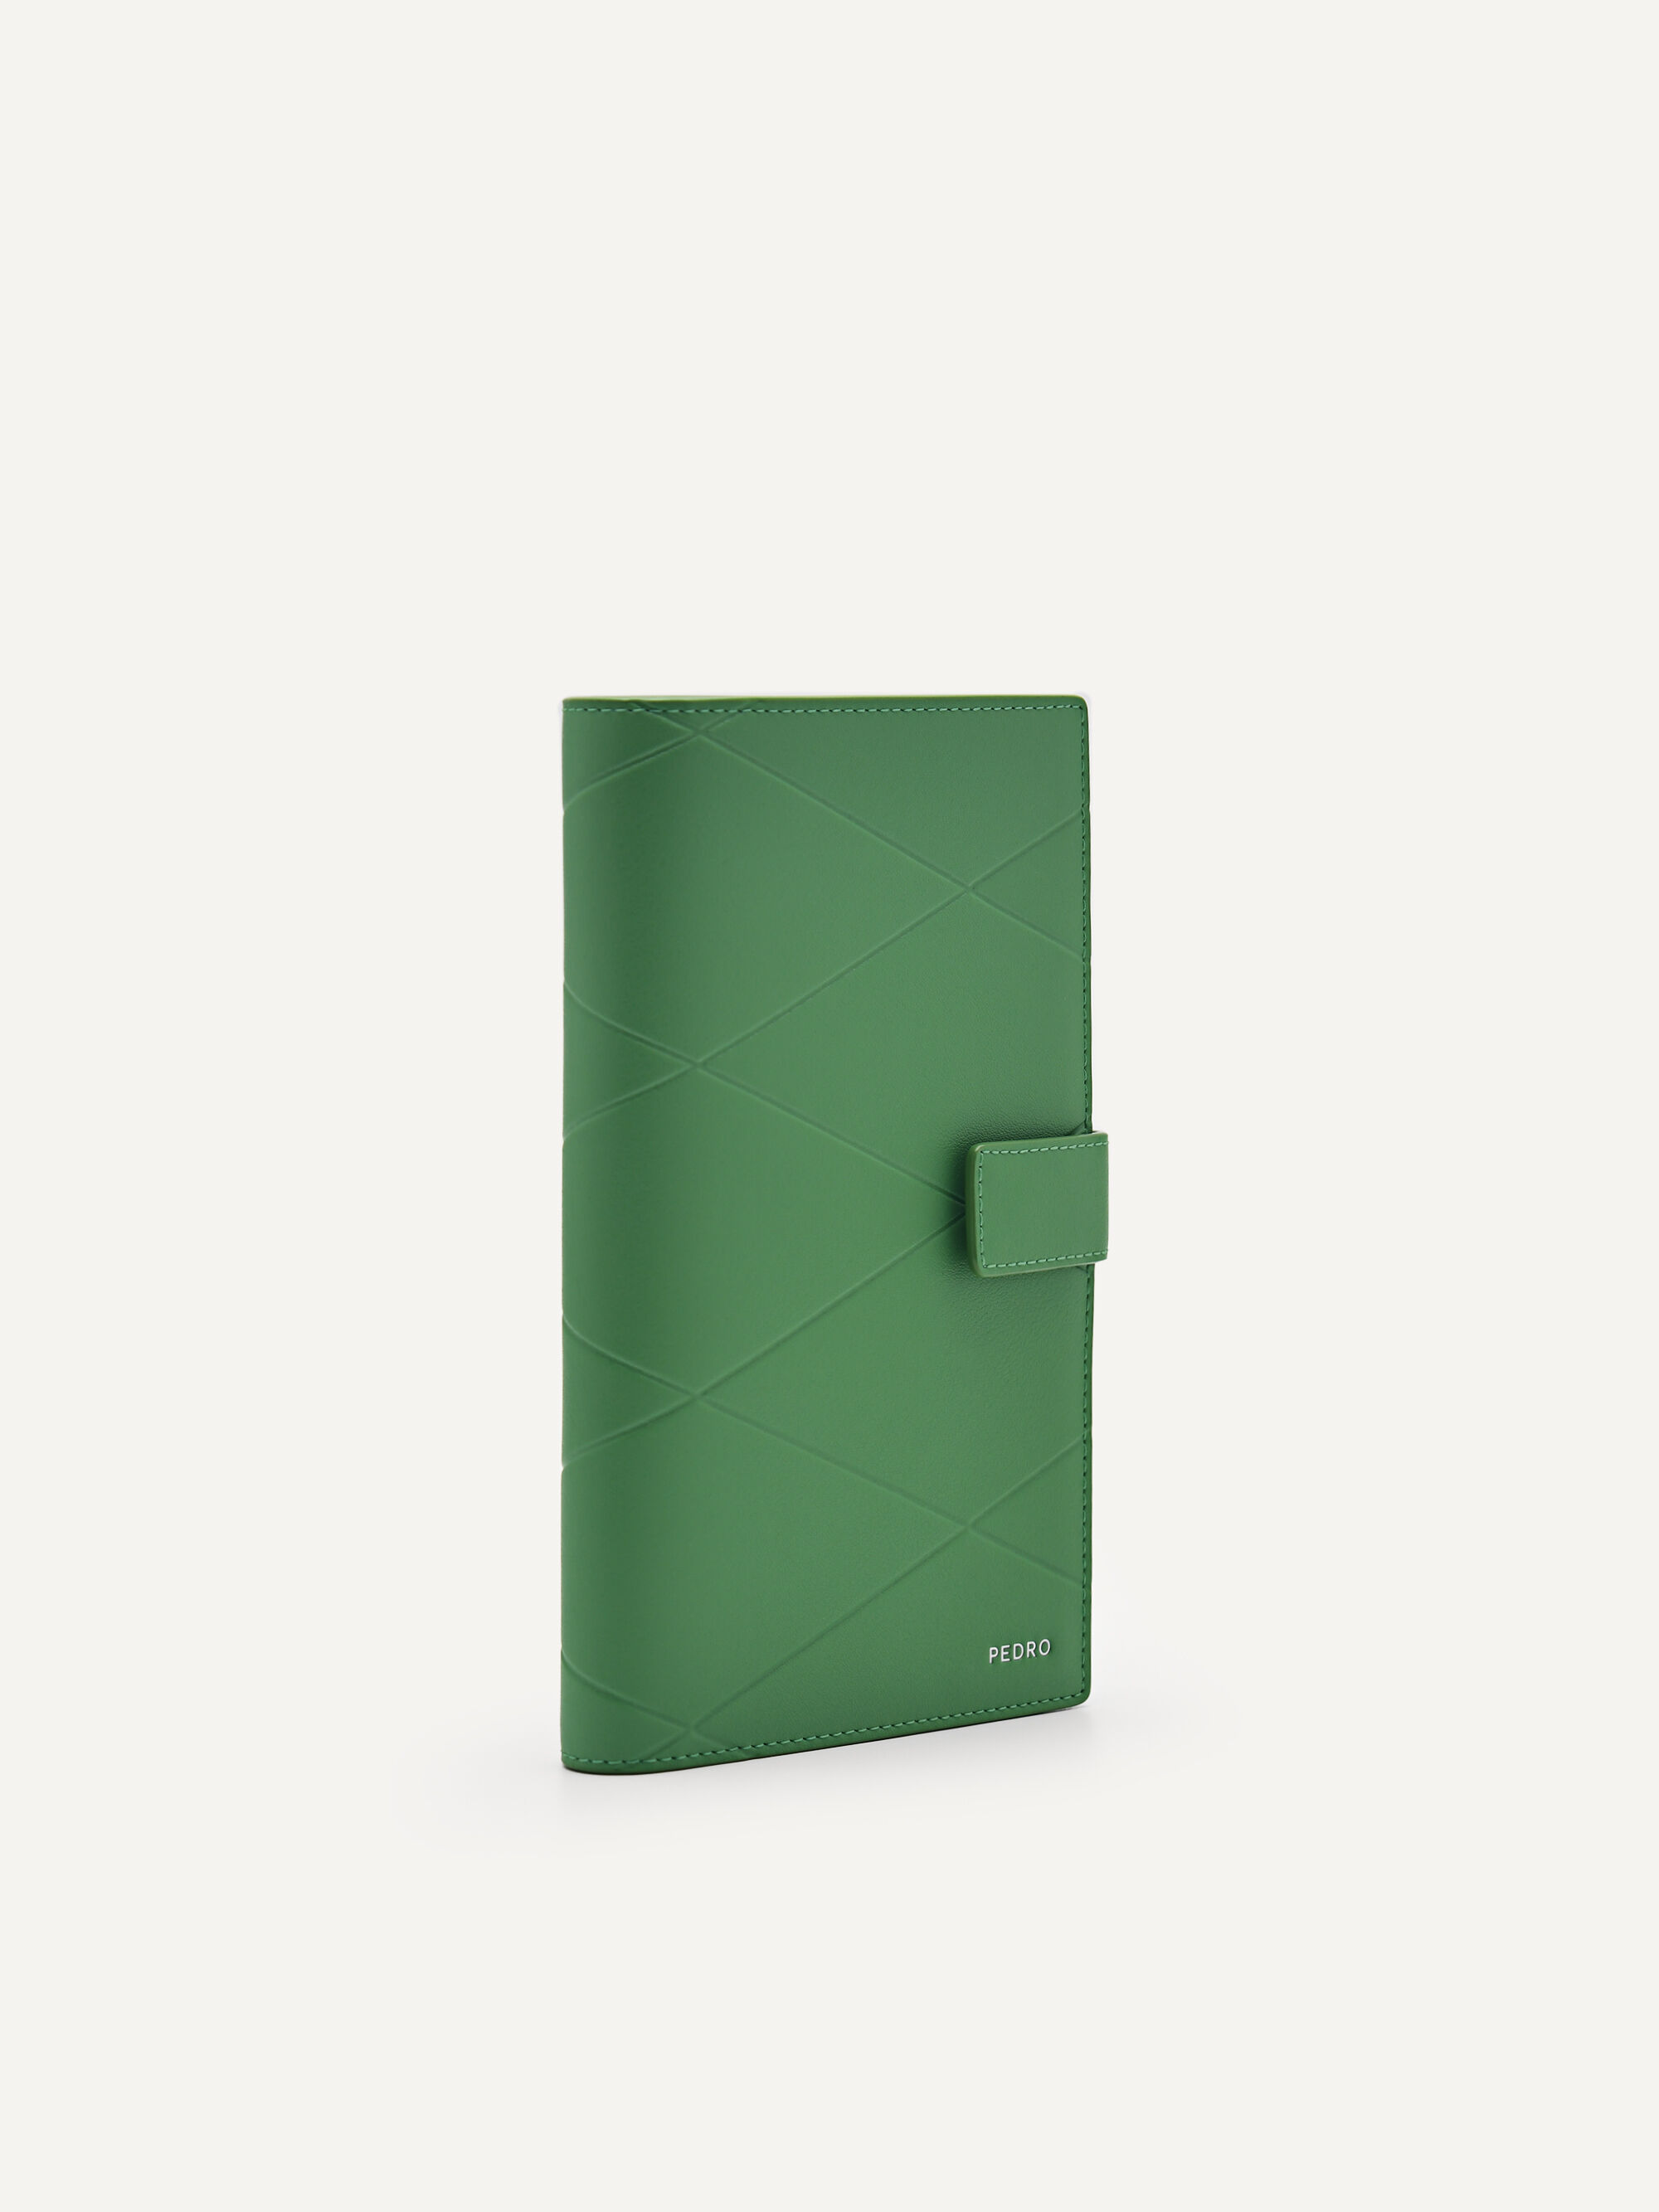 Leather Micro Bi-Fold Travel Organiser, Green